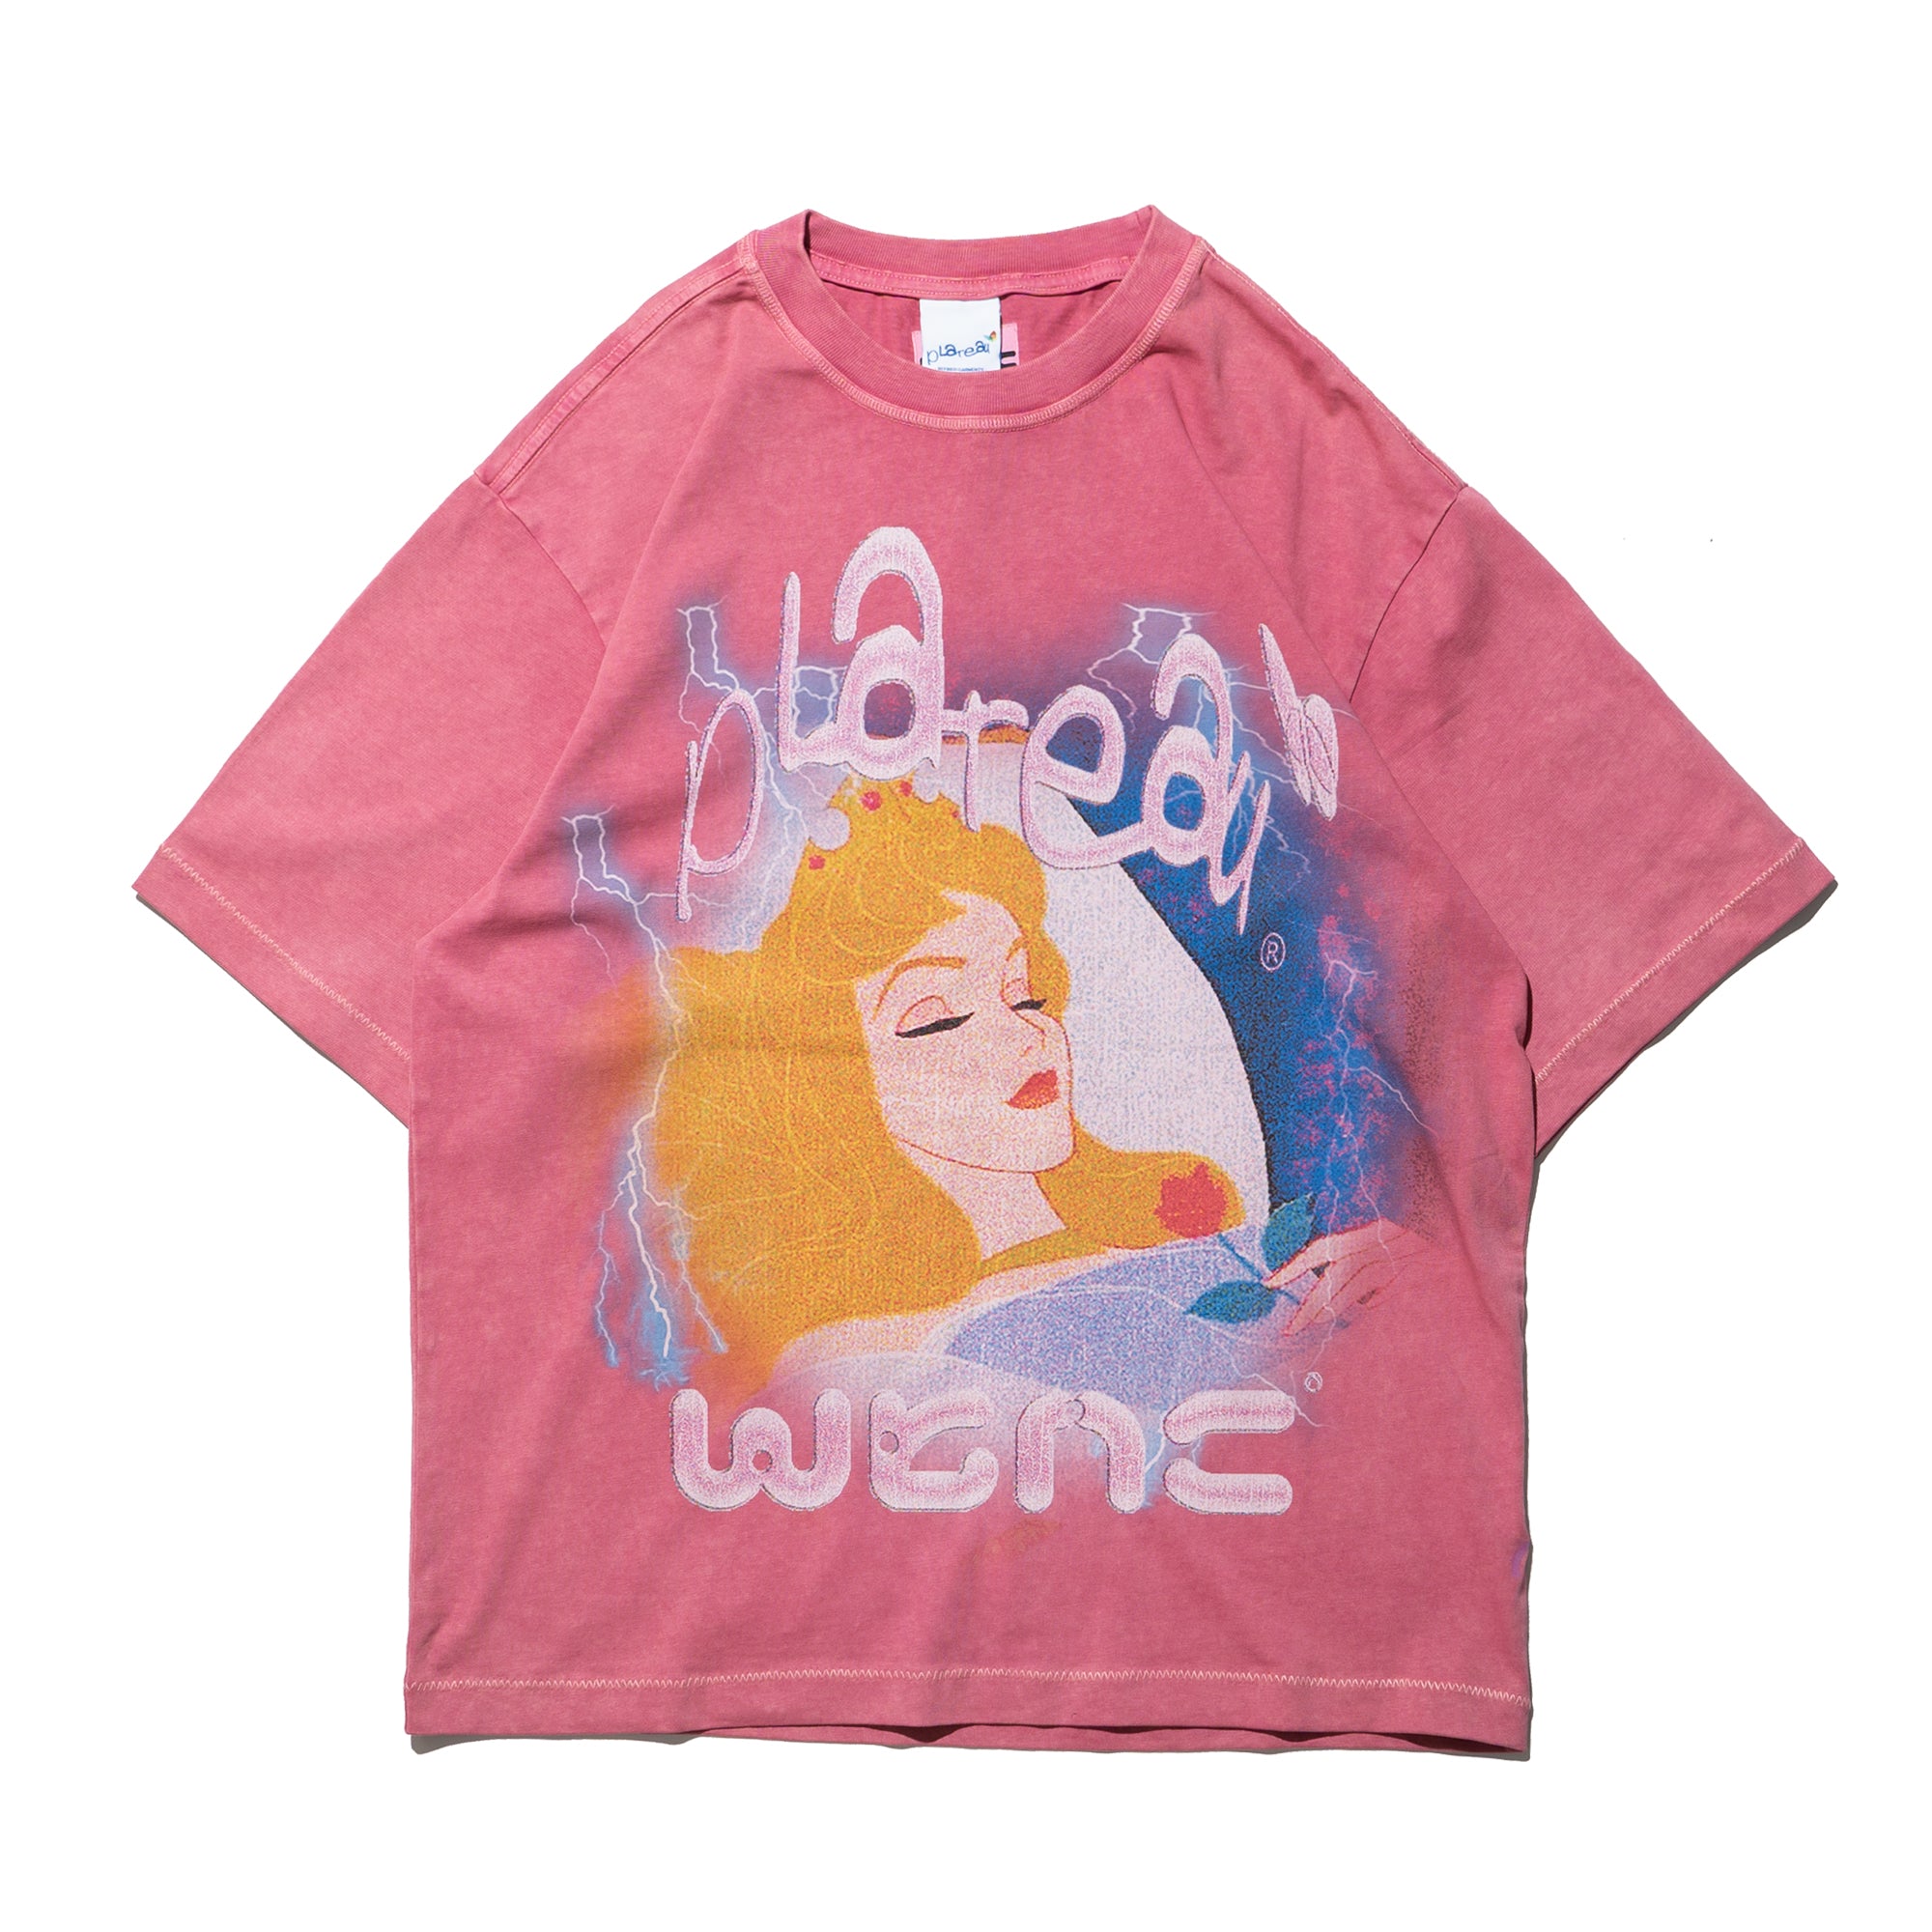 WTNC x Plateau Studio "Sleeping Beauty" shirt